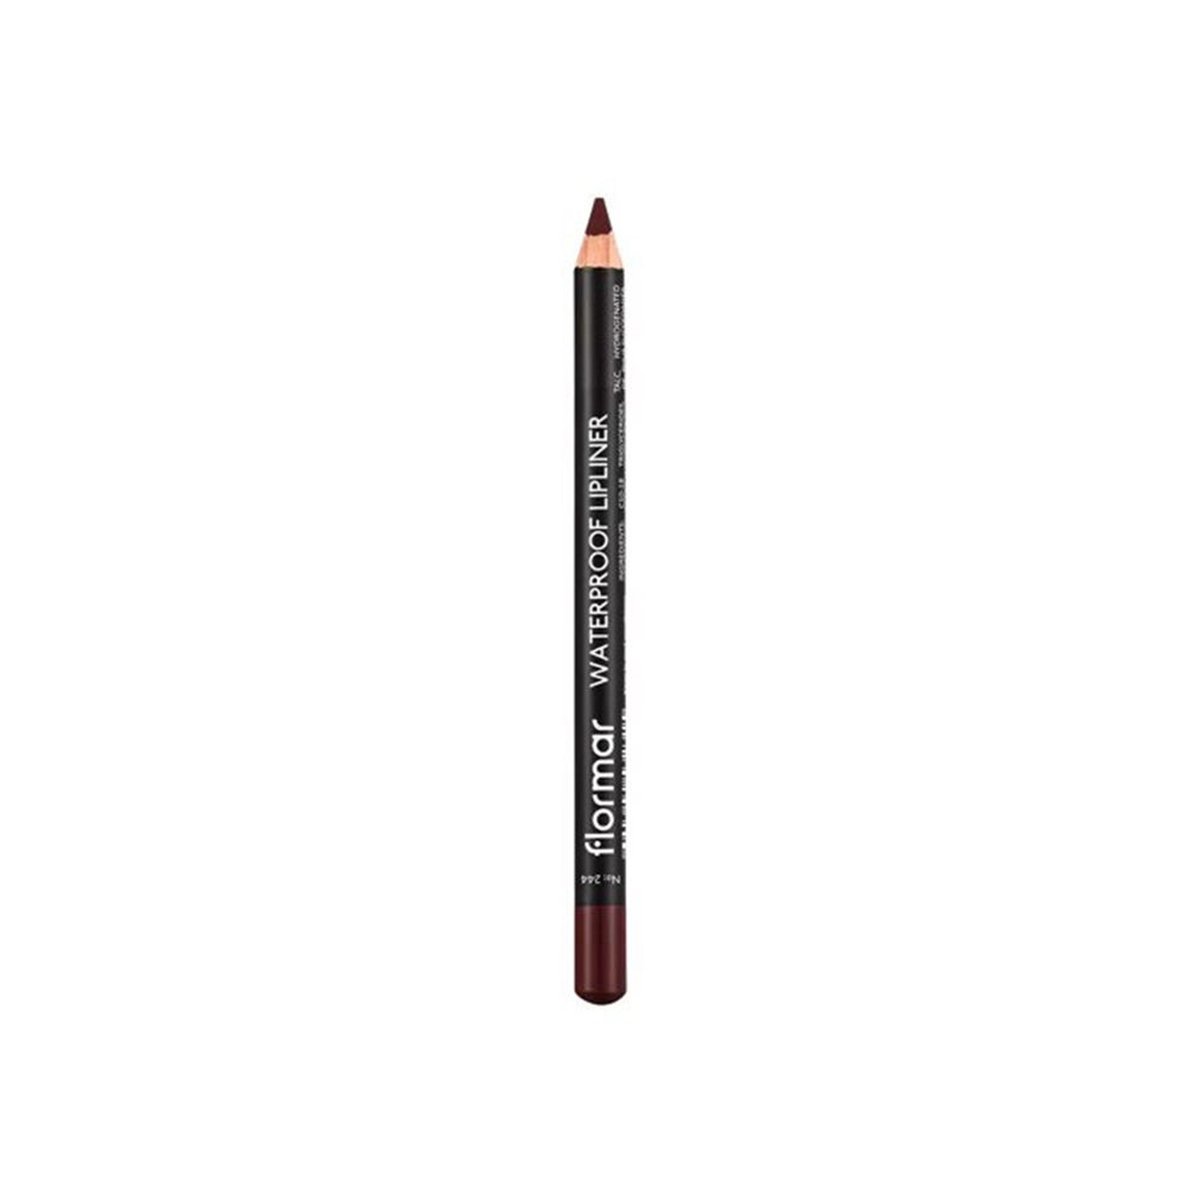 Flormar Waterproof Lipliner Pencil - 244 Chocolate Fondue 1pc